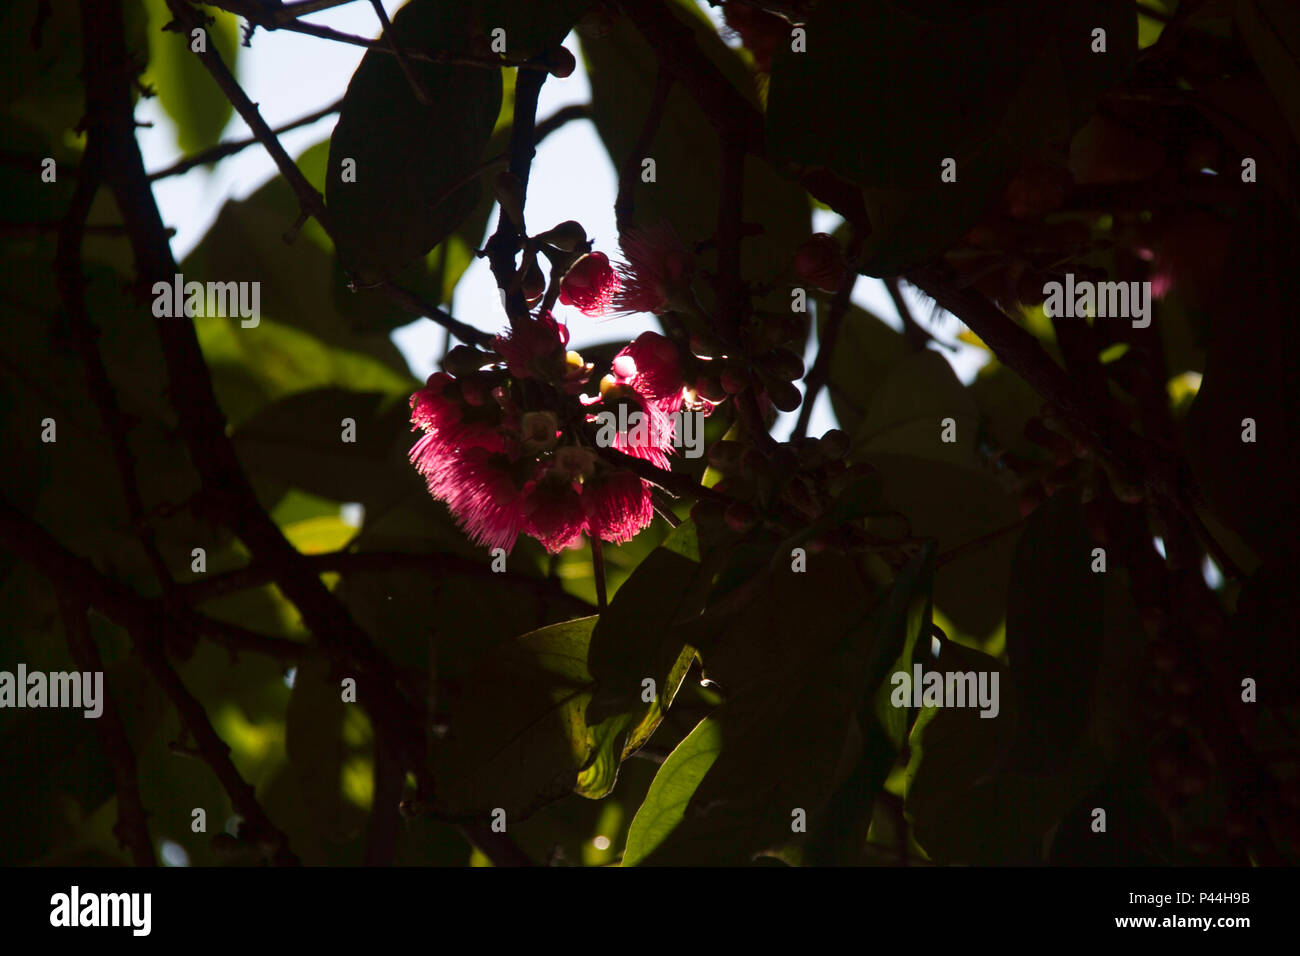 Flor em meio galhos arvore una de uma. Vitoria / ES Data 23/11/2012 (Foto: CiÃ§un Neder / Fotoarena) Foto de stock